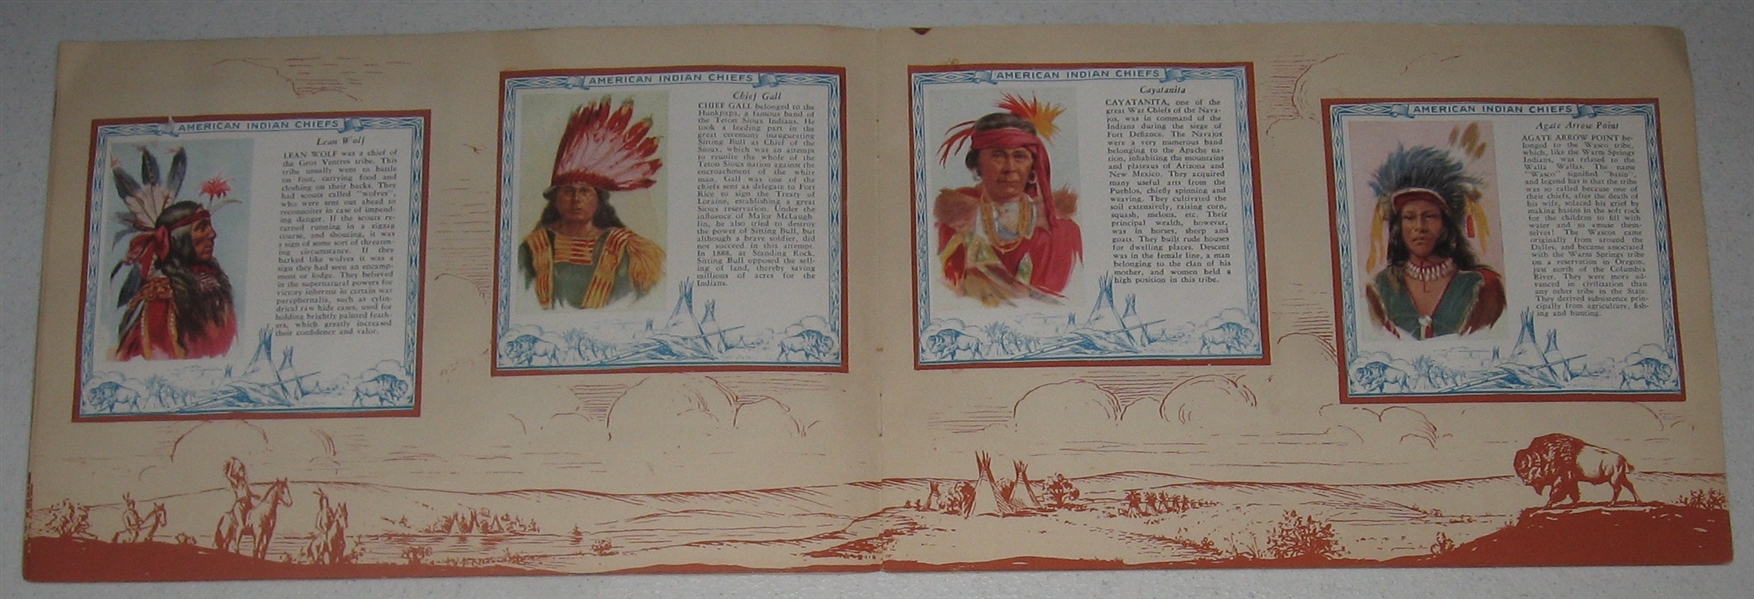 1930s D6 Krug's, Cushman & Kelley's American Indian Chiefs W/ Album